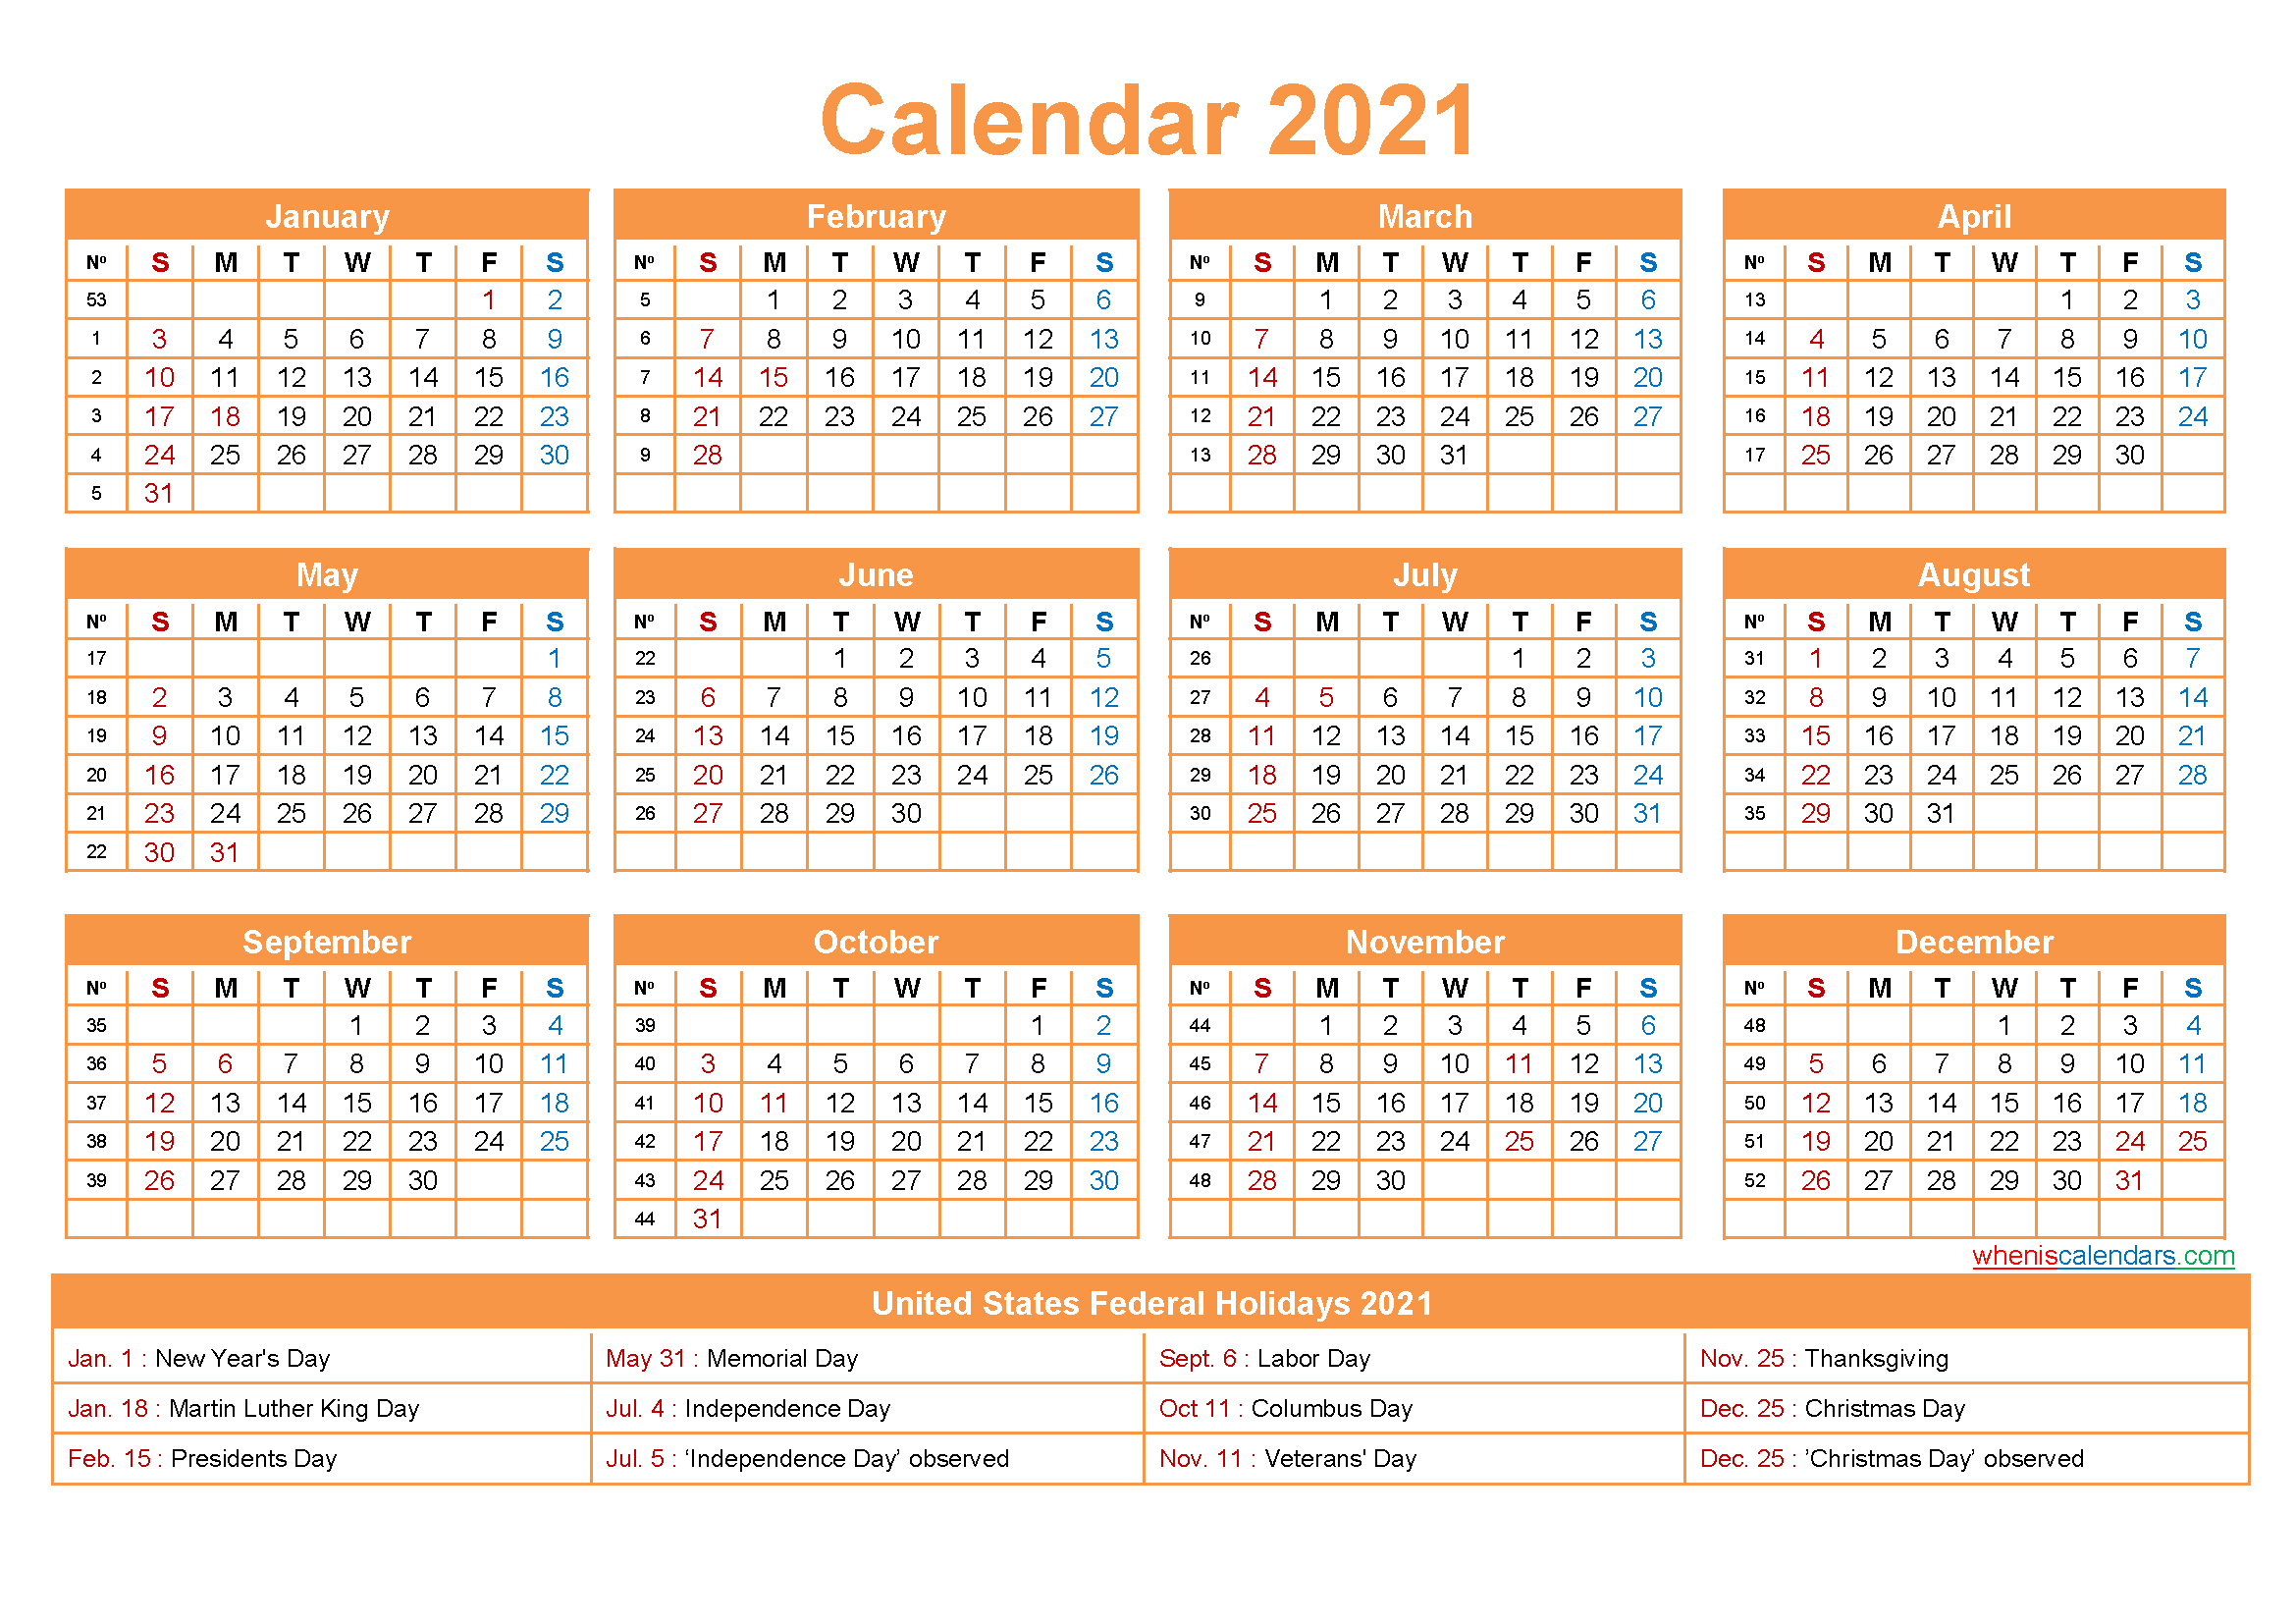 Номер недели март. Календарь с номерами недель. Календарь года с номерами недель. Календарь с номерами недель 2021. Календарь по неделям.